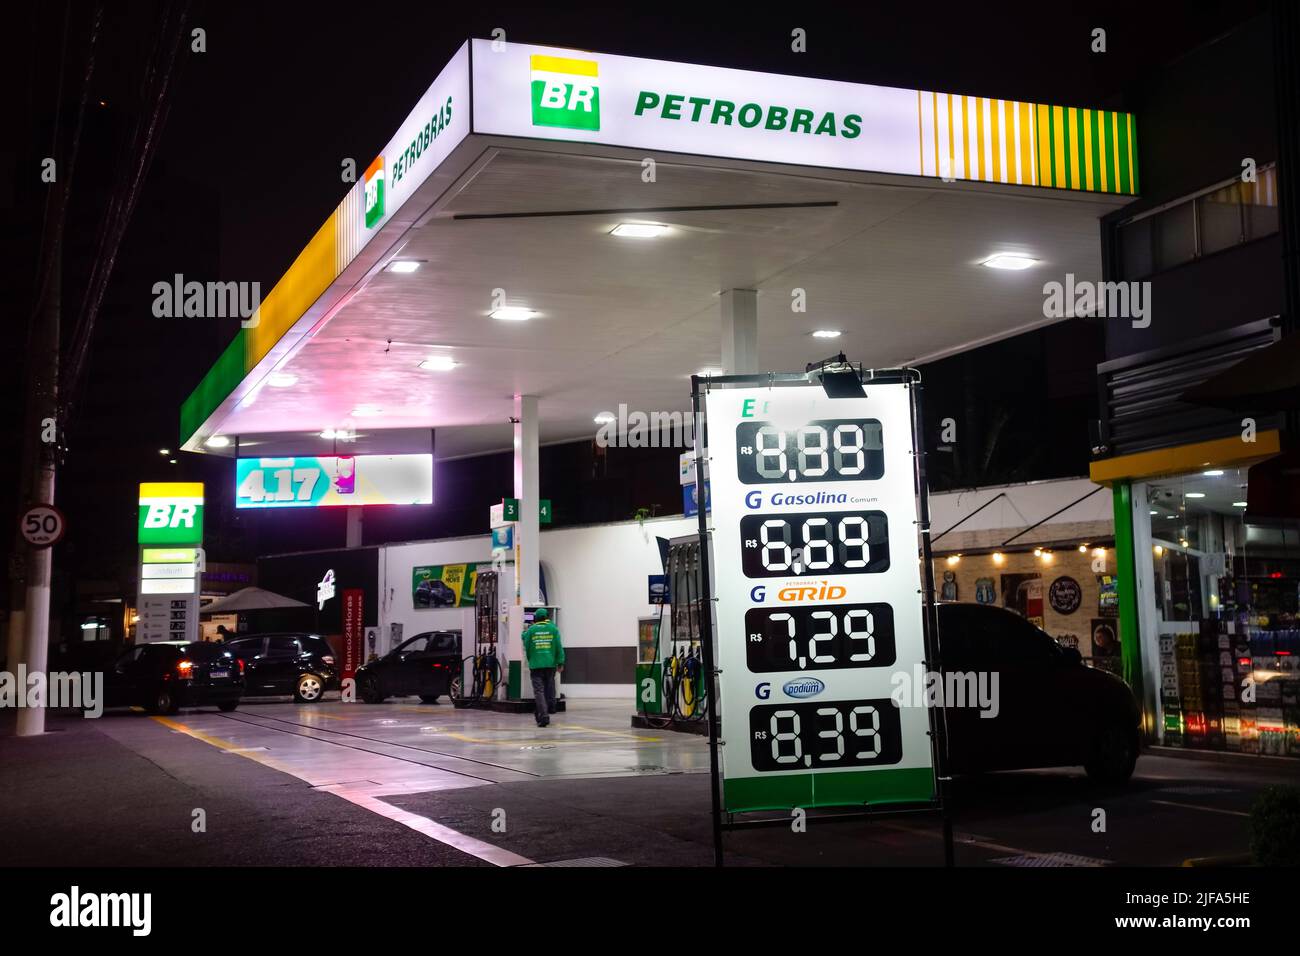 Sao Paulo, Brasilien: Ölgesellschaft und Tankstelle Petrobras BR. Hohe Inflationspreise Stockfoto